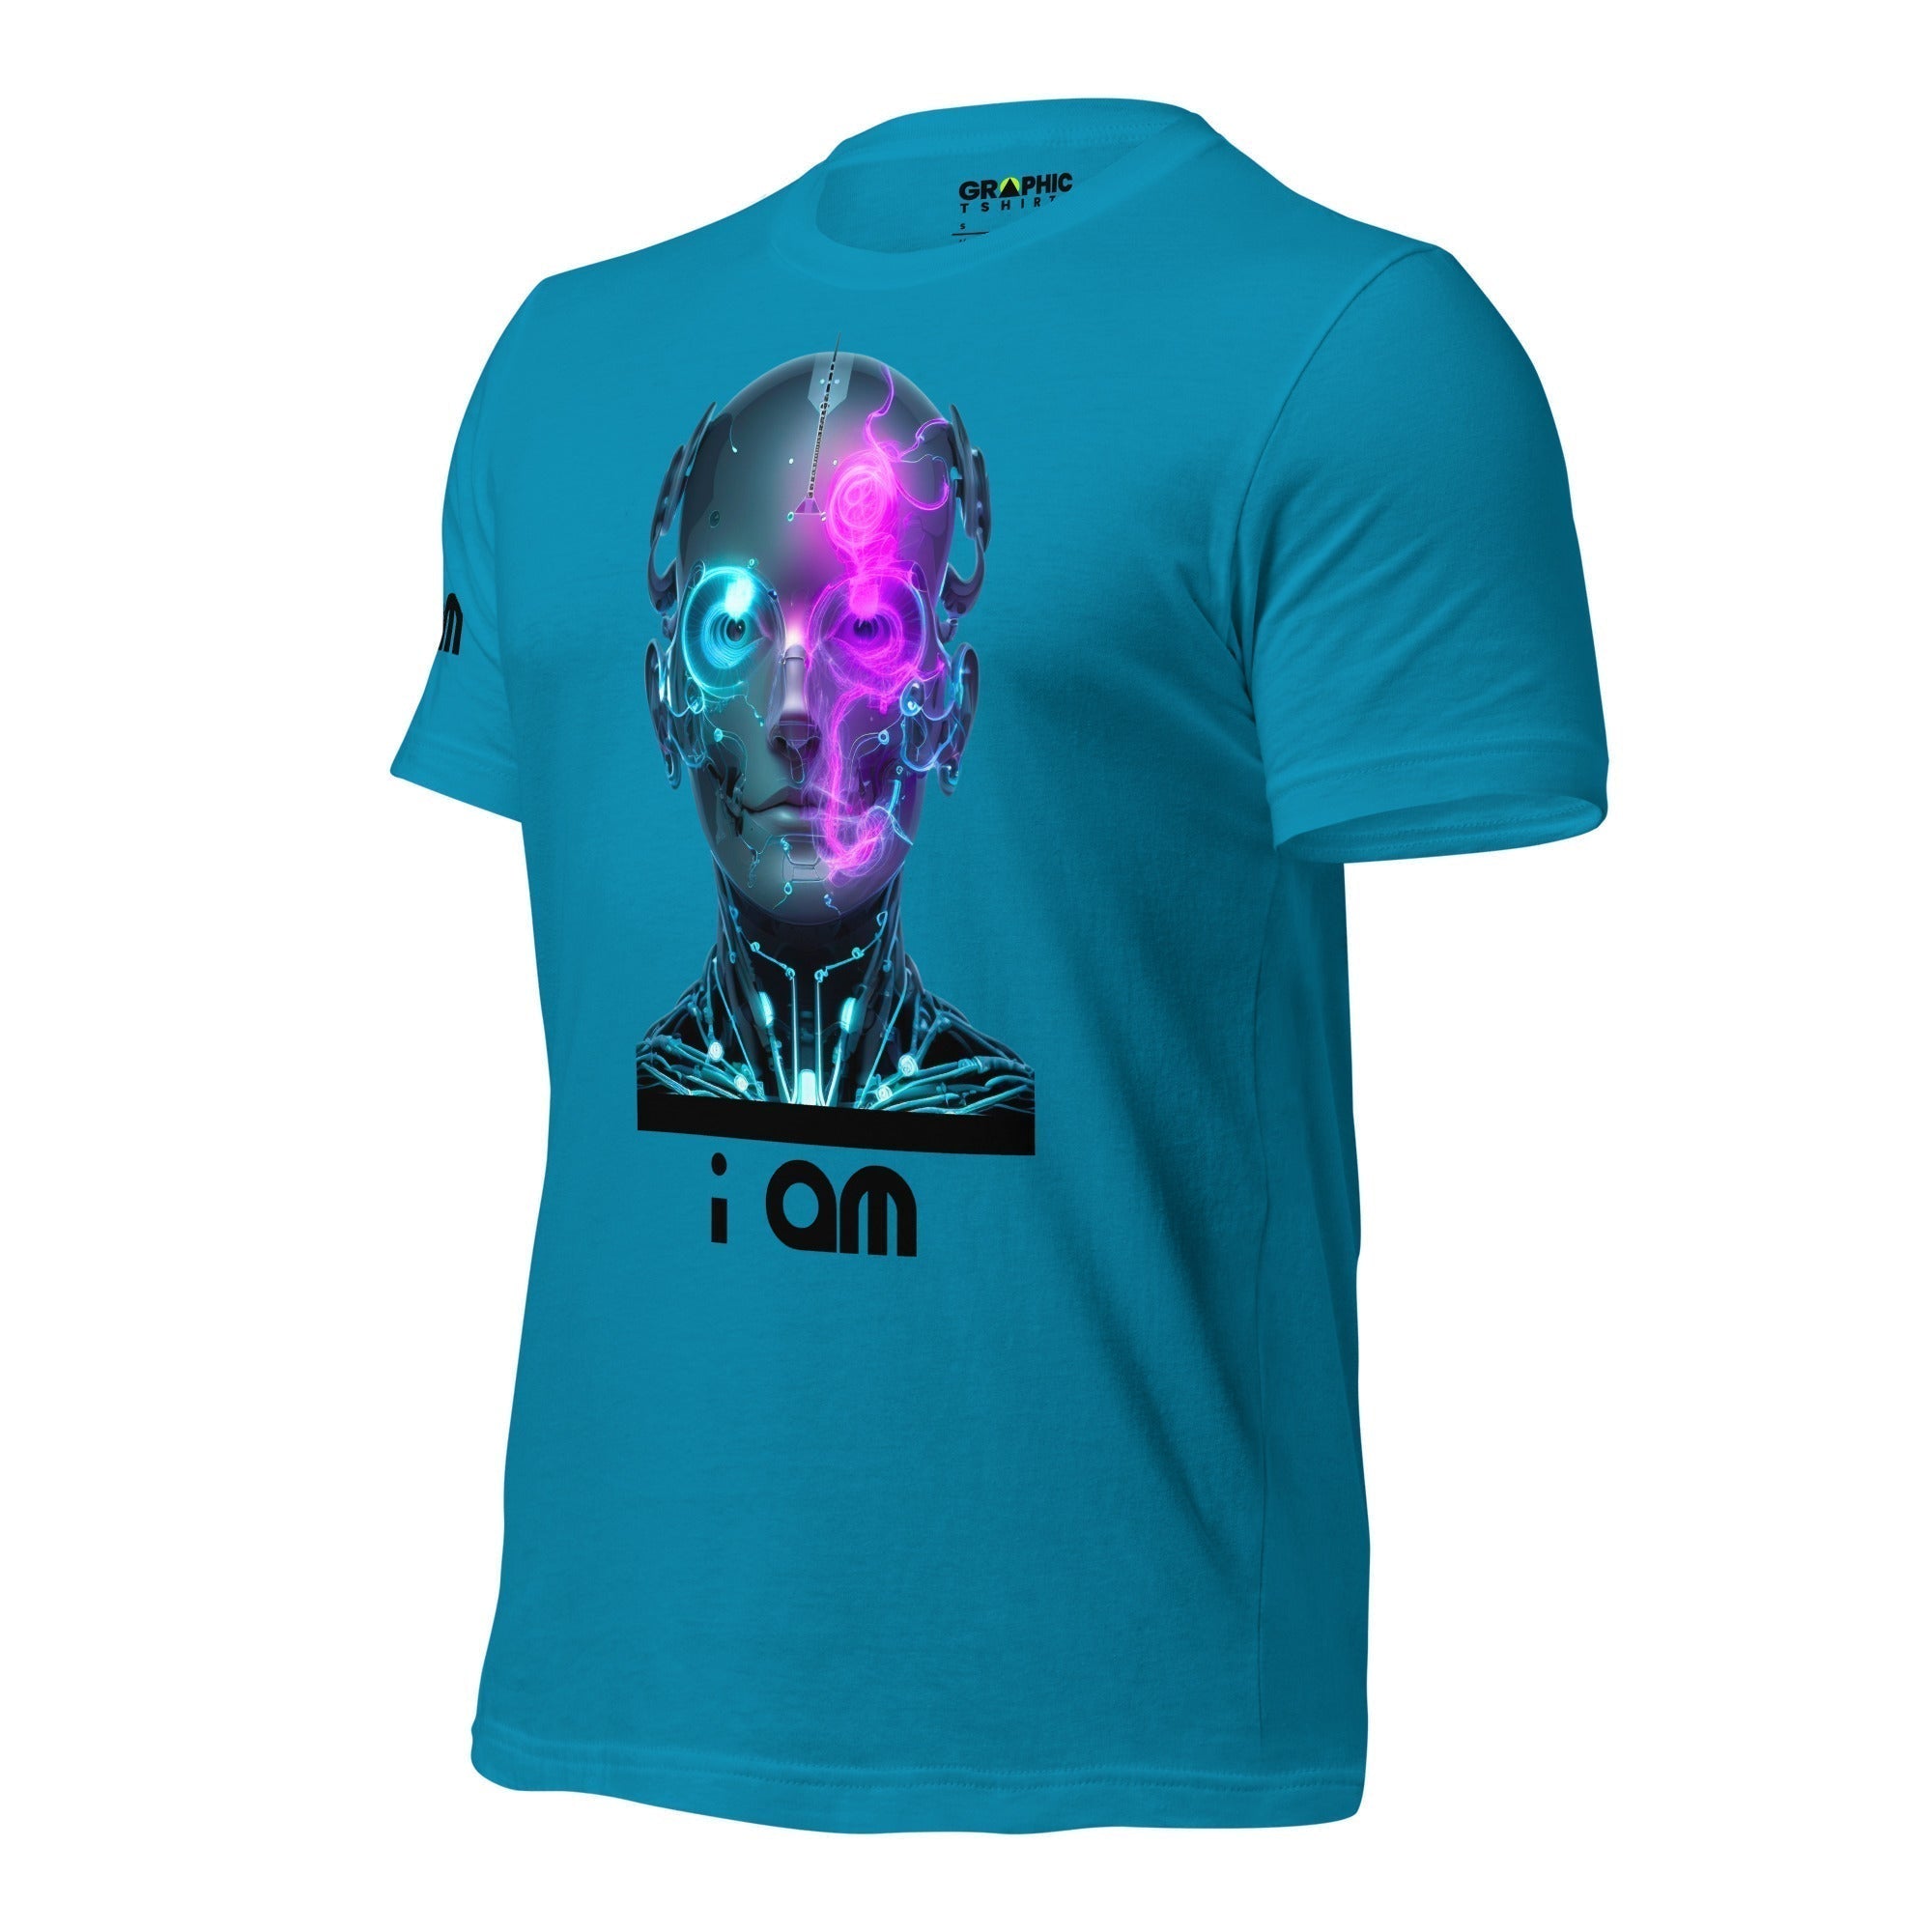 Unisex Crew Neck T-Shirt - I Am - GRAPHIC T-SHIRTS